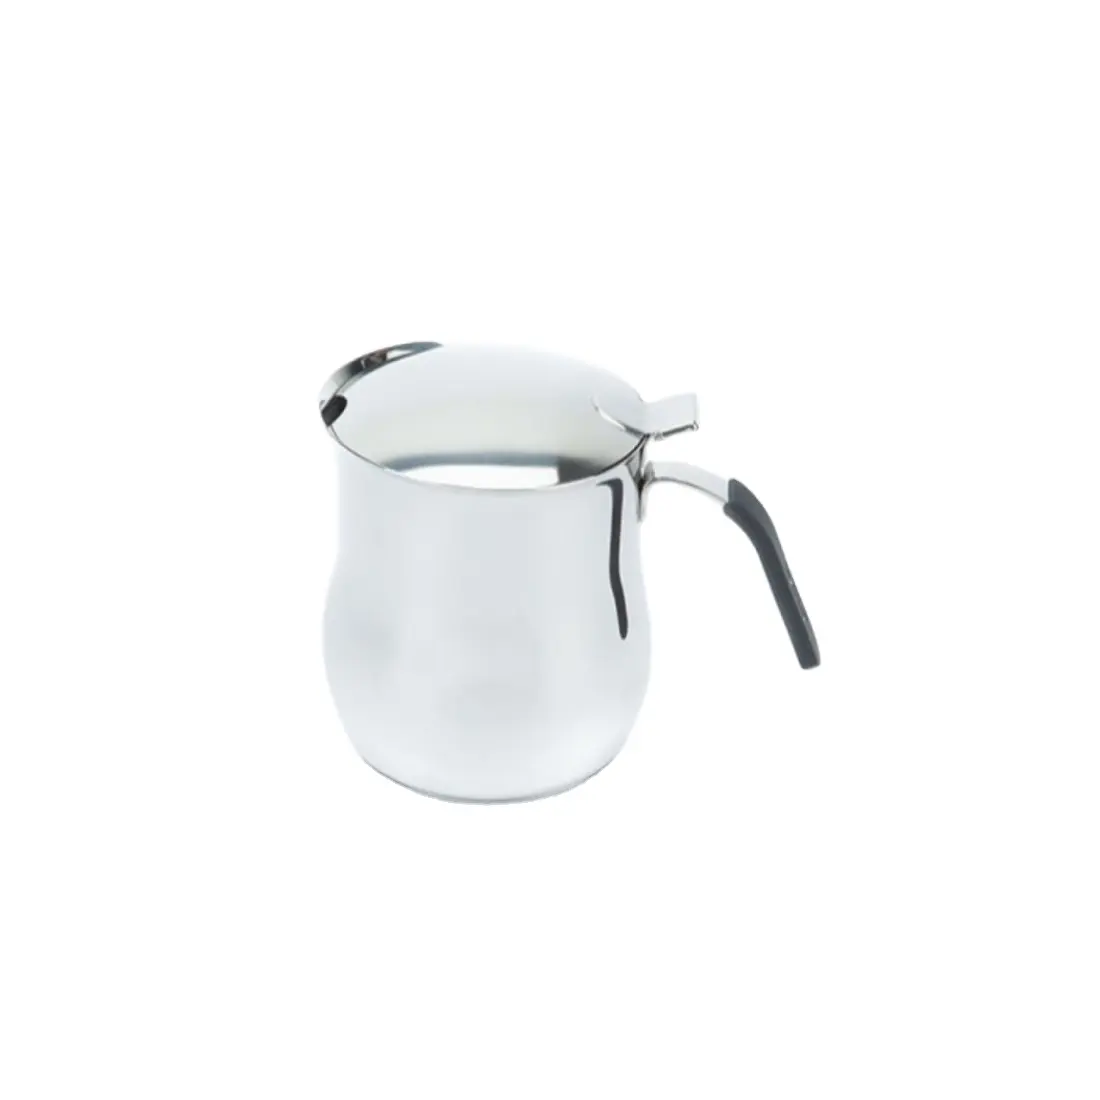 Panci kopi silikon pegangan ergonomis 4 cangkir pemanasan air susu Thee alat dapur teh aksesoris memasak melayani bahan Eco